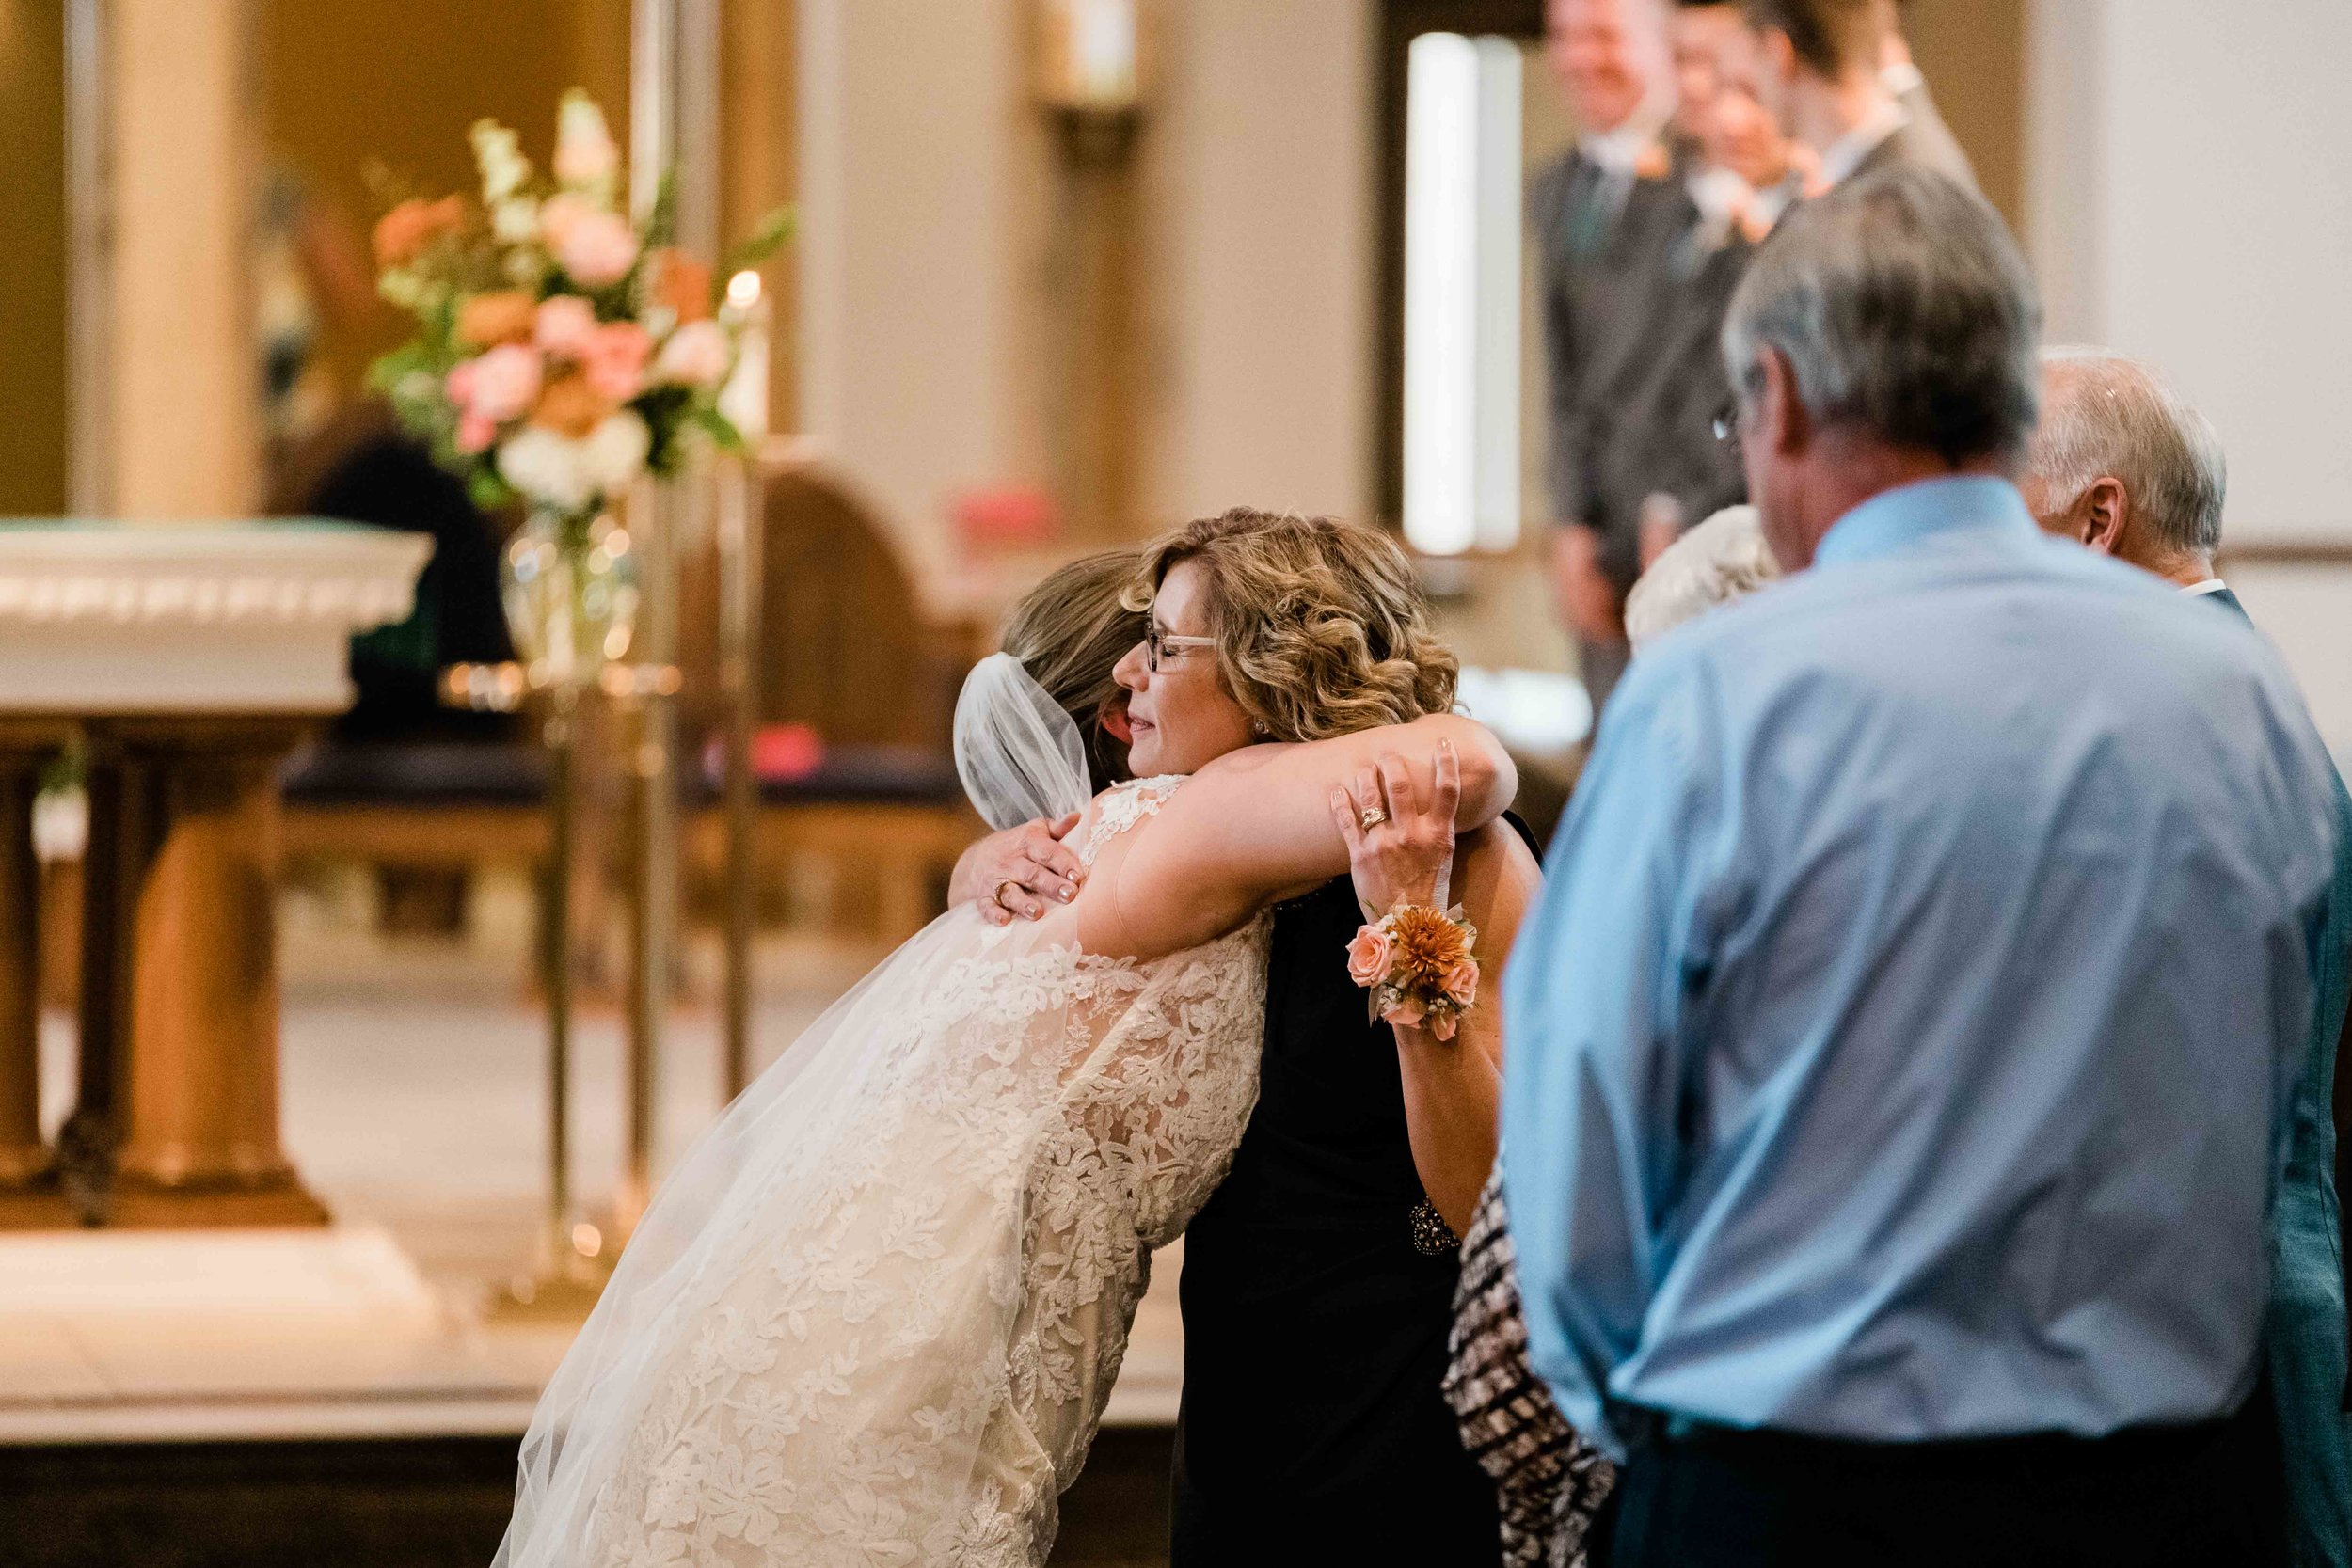 Bride hugs her new mother in law